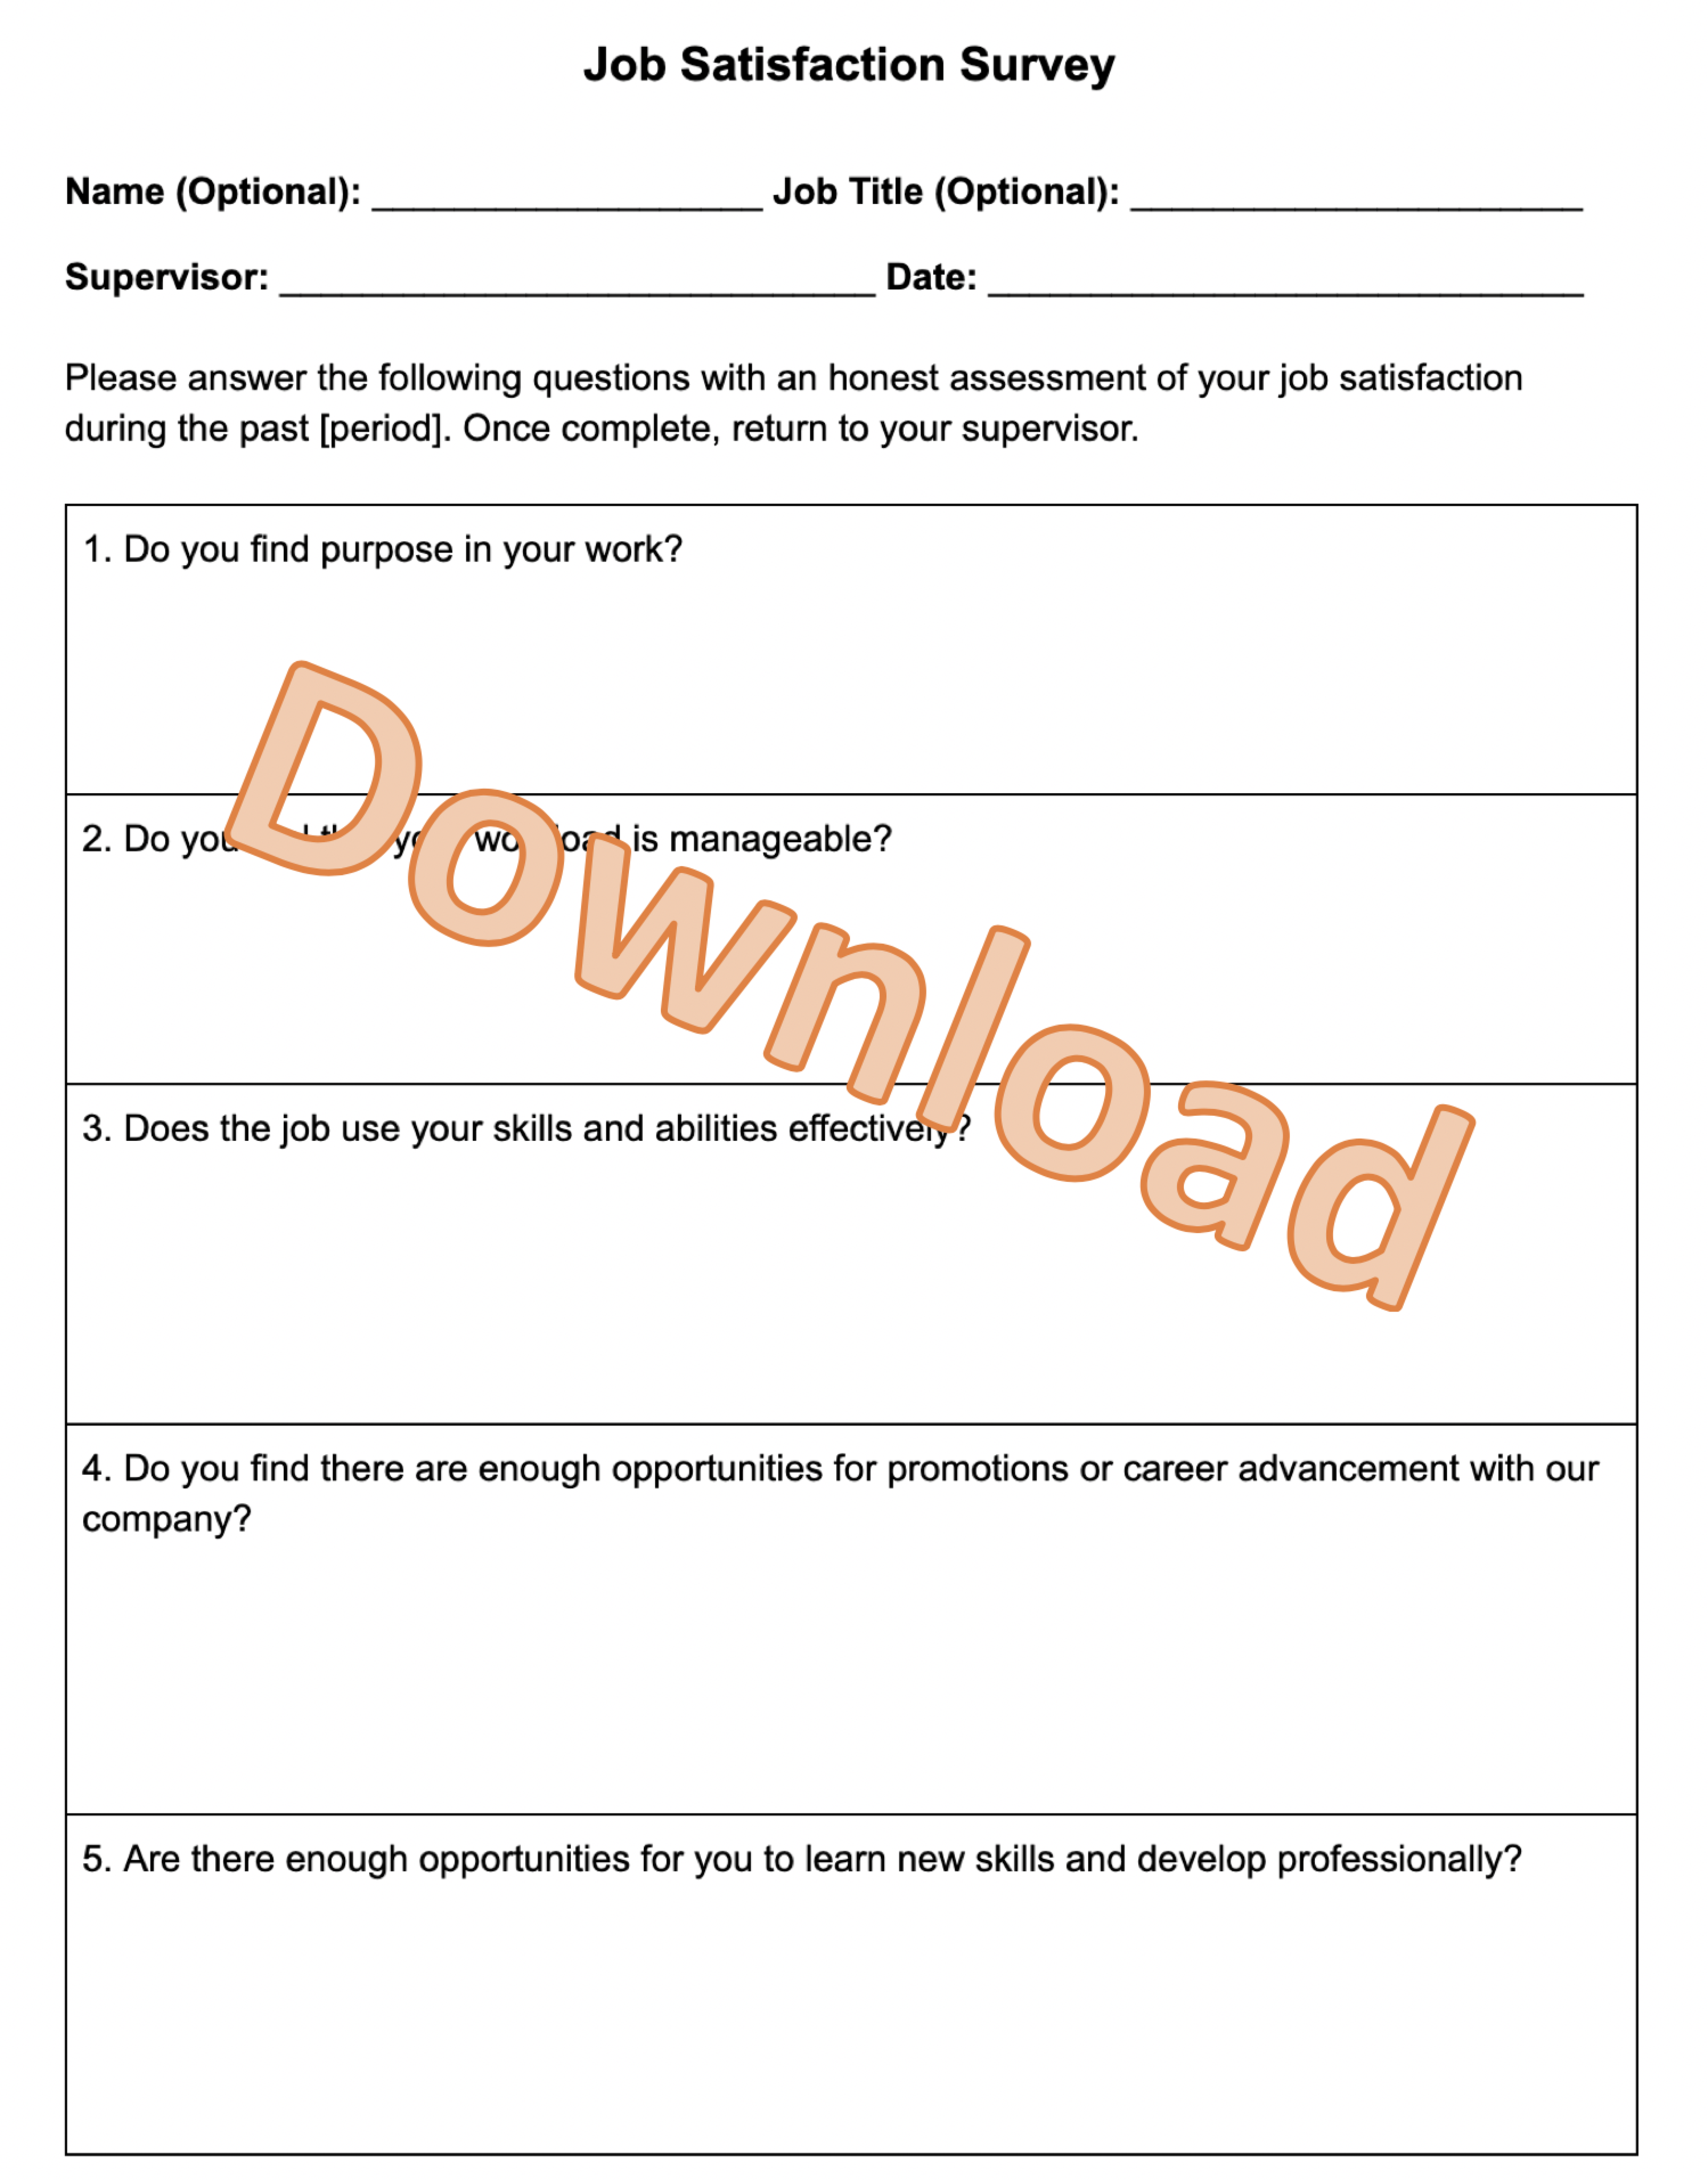 Job Satisfaction Survey Template - Long Form